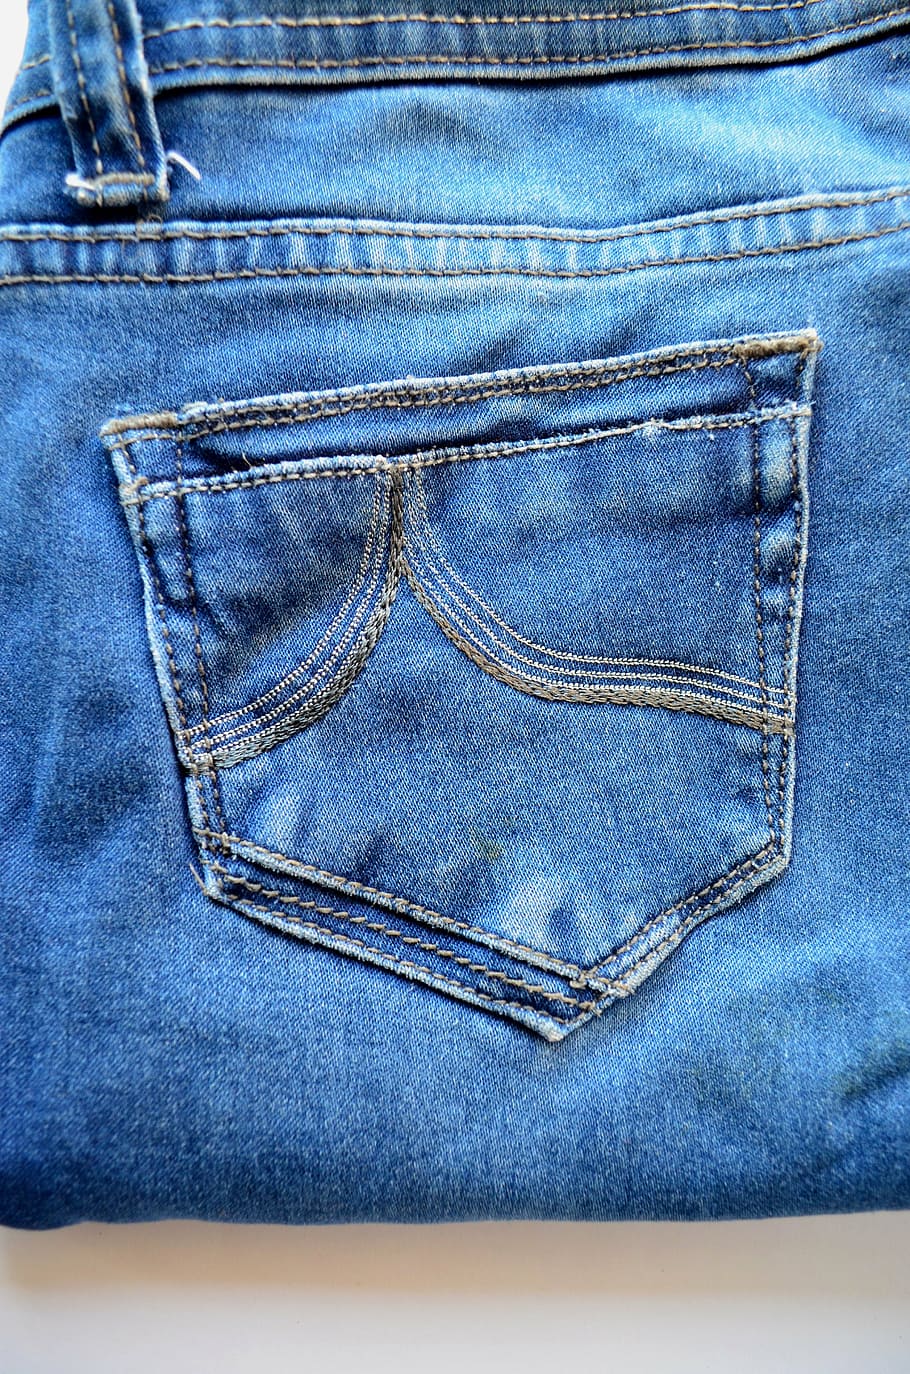 blue jeans, jeans, azul, bolsillo, moda, ropa, casual, denim, algodón, tela